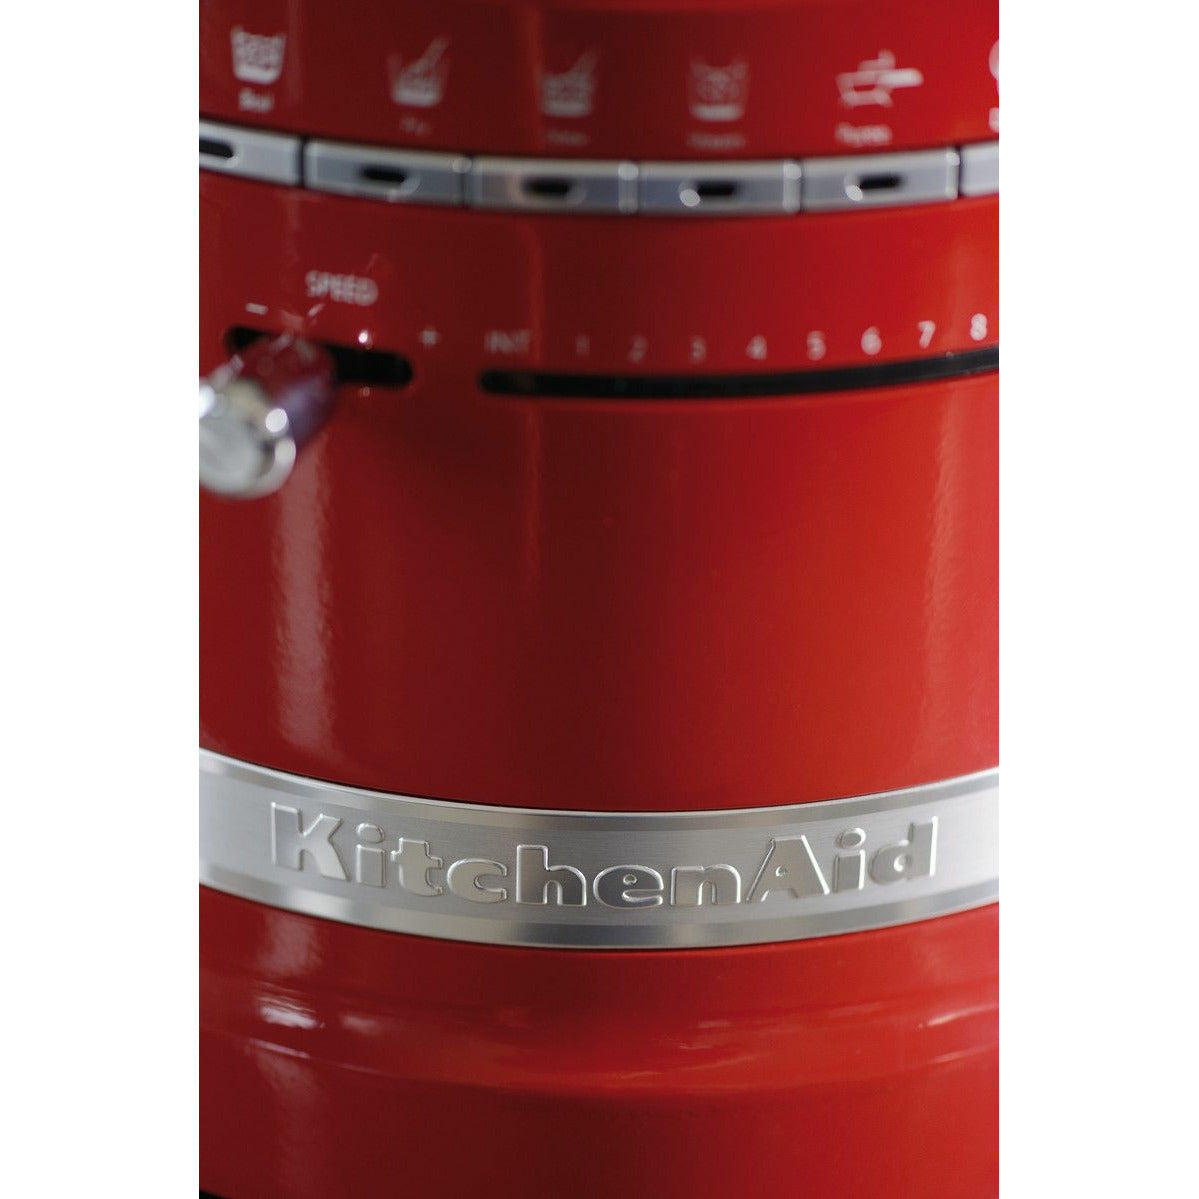 KitchenAid 5KCF0104 Artisan Cook Processor, Rød Metallic